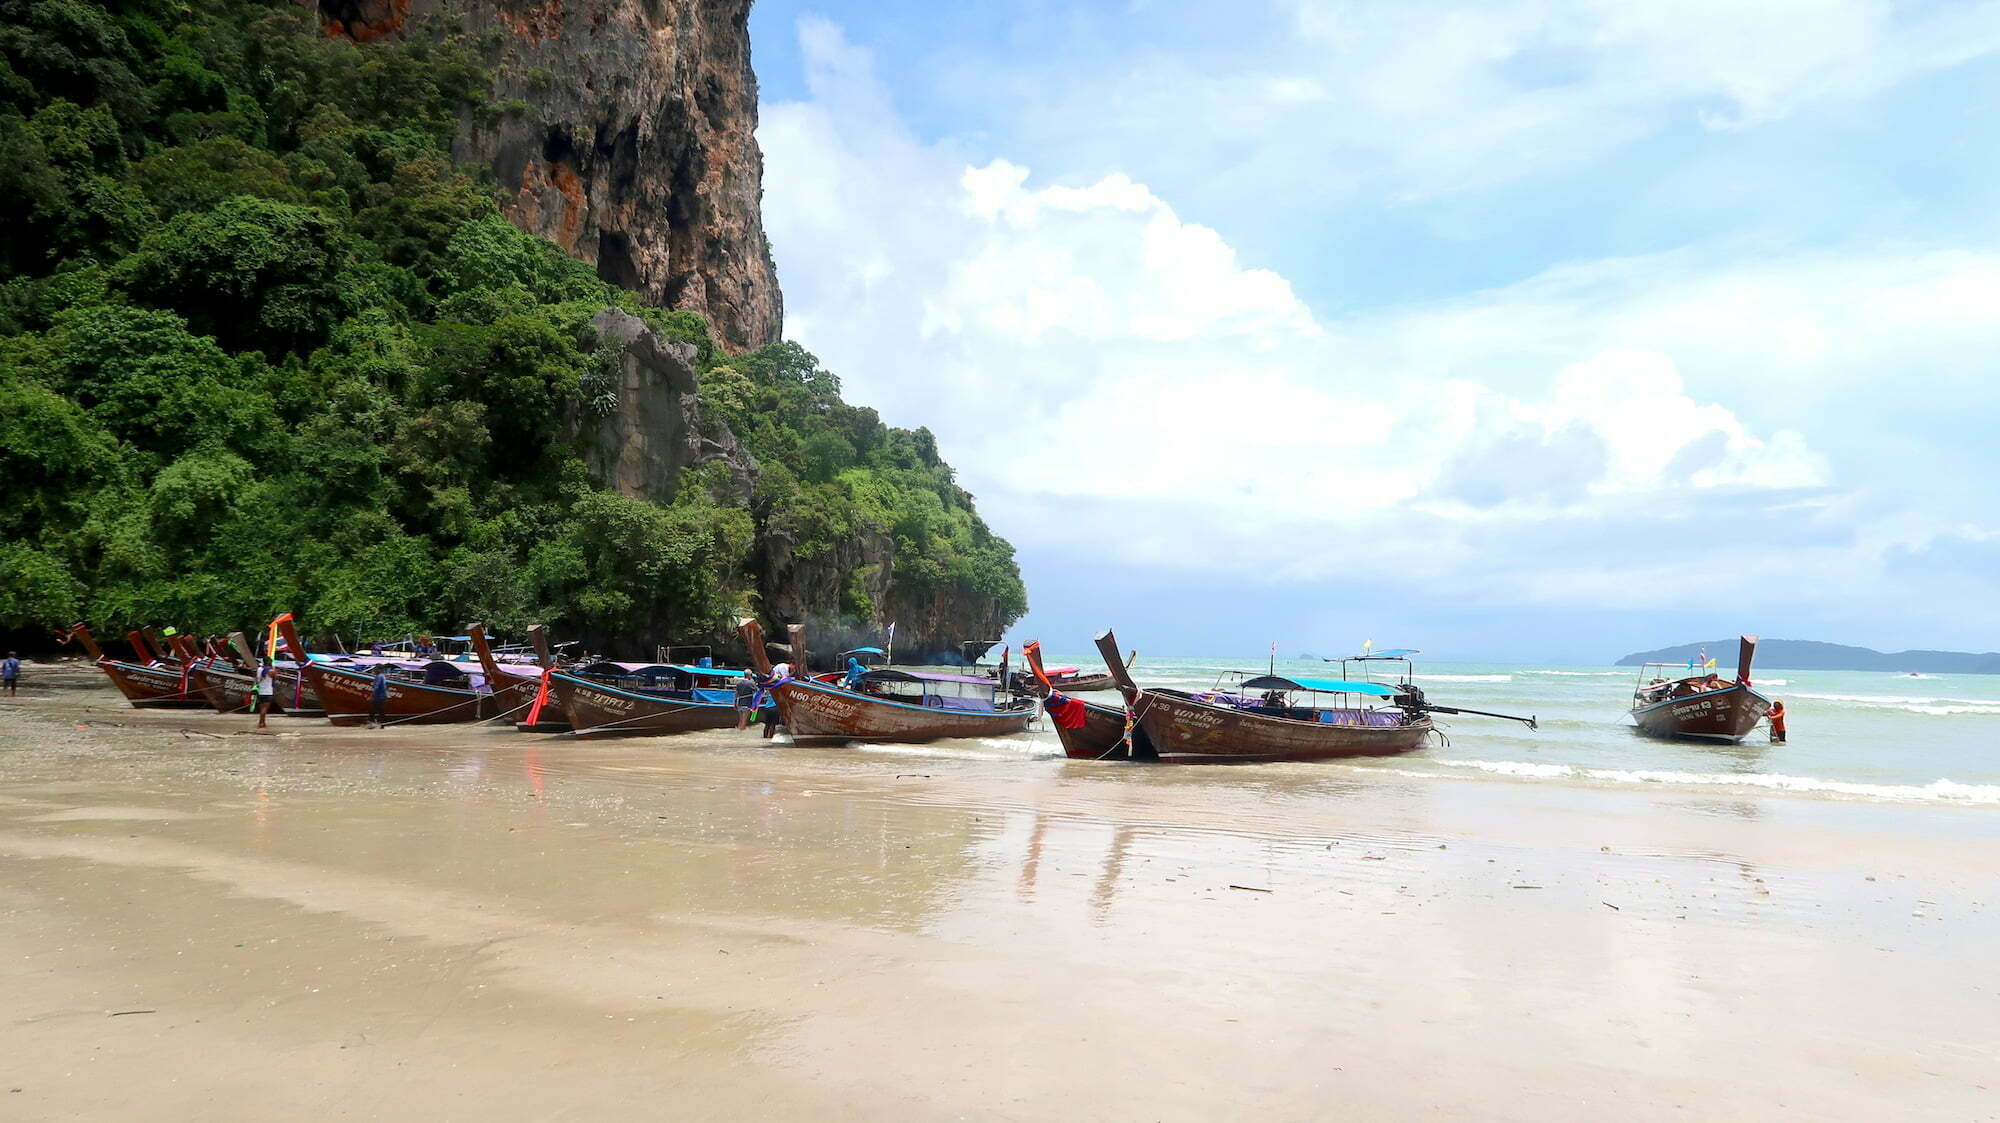 Thailand Railey beach, snorkelen & kajakken!